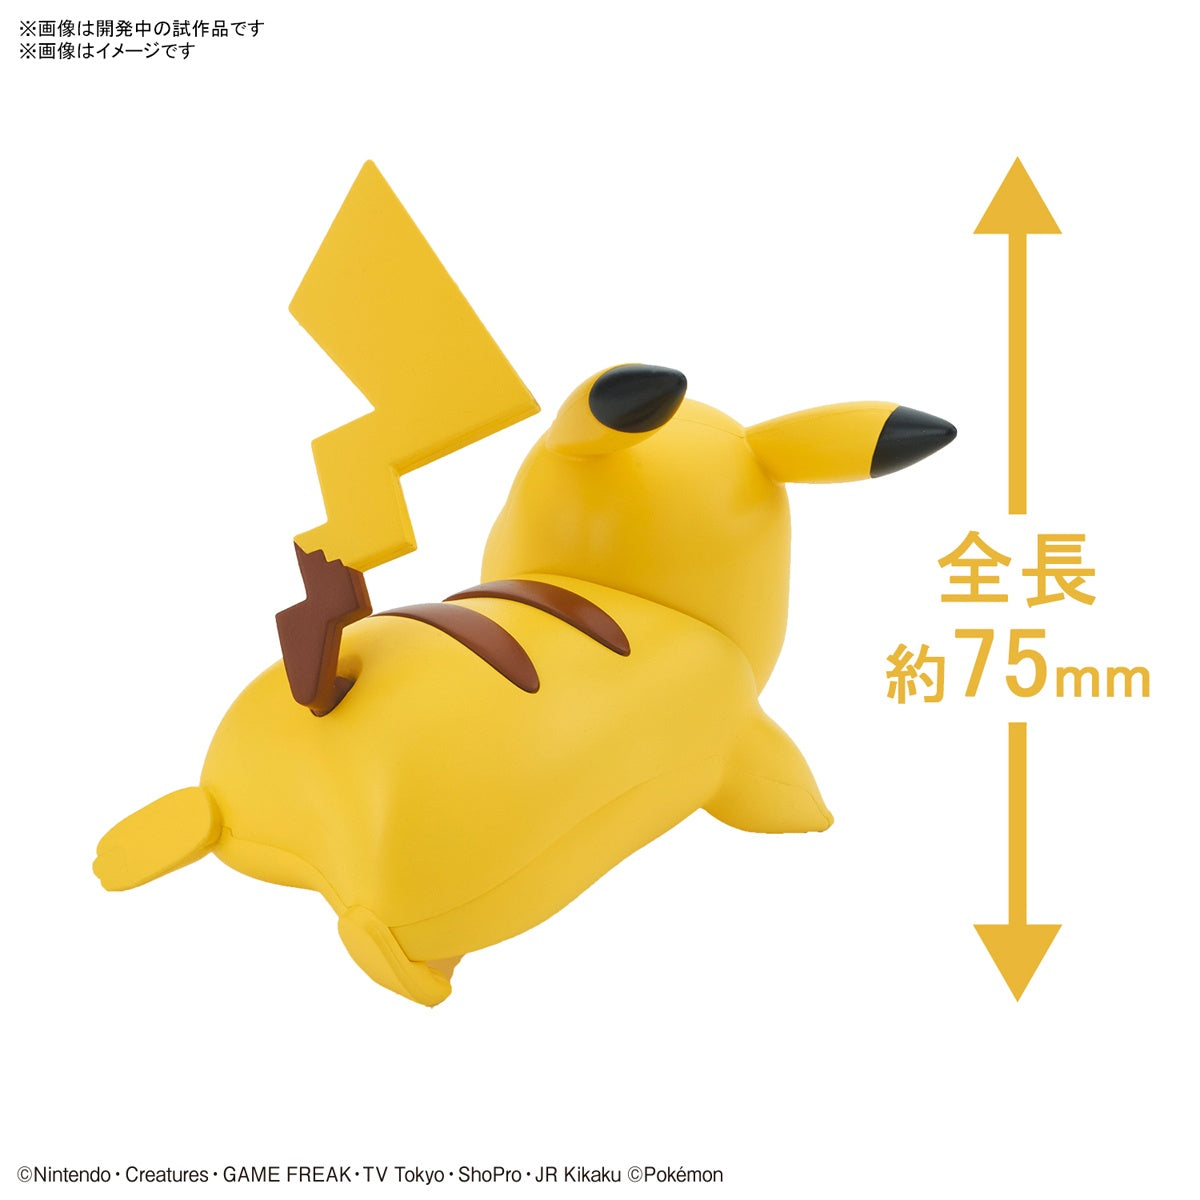 Pokemon: Pikachu Bandai Model Kit